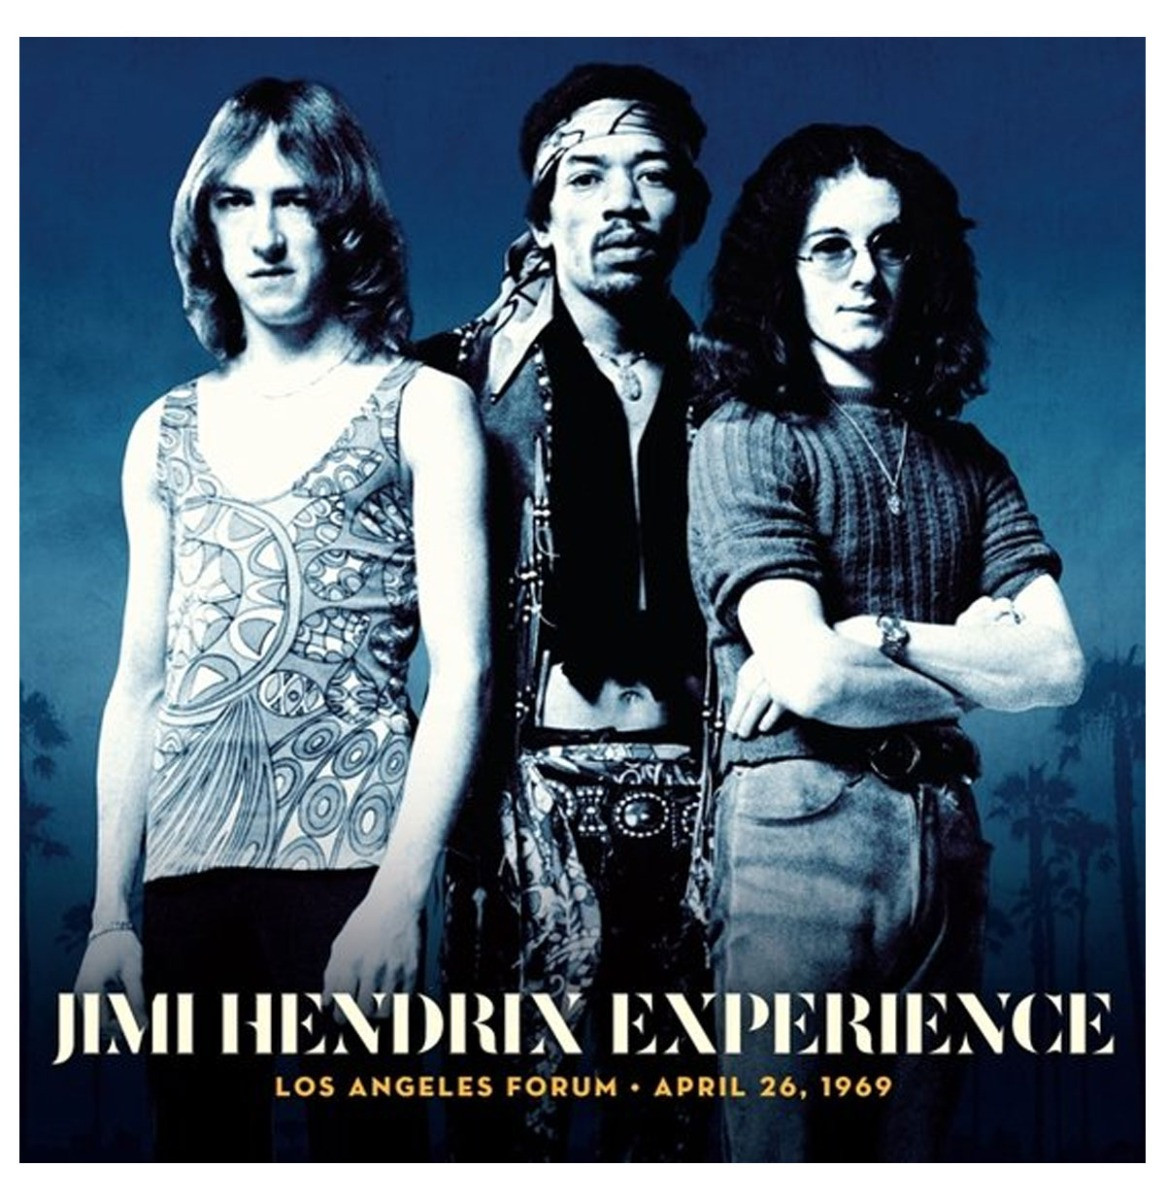 Jimi Hendrix Experience - Los Angeles Forum - 26 April, 1969 - Deluxe 2-LP Set